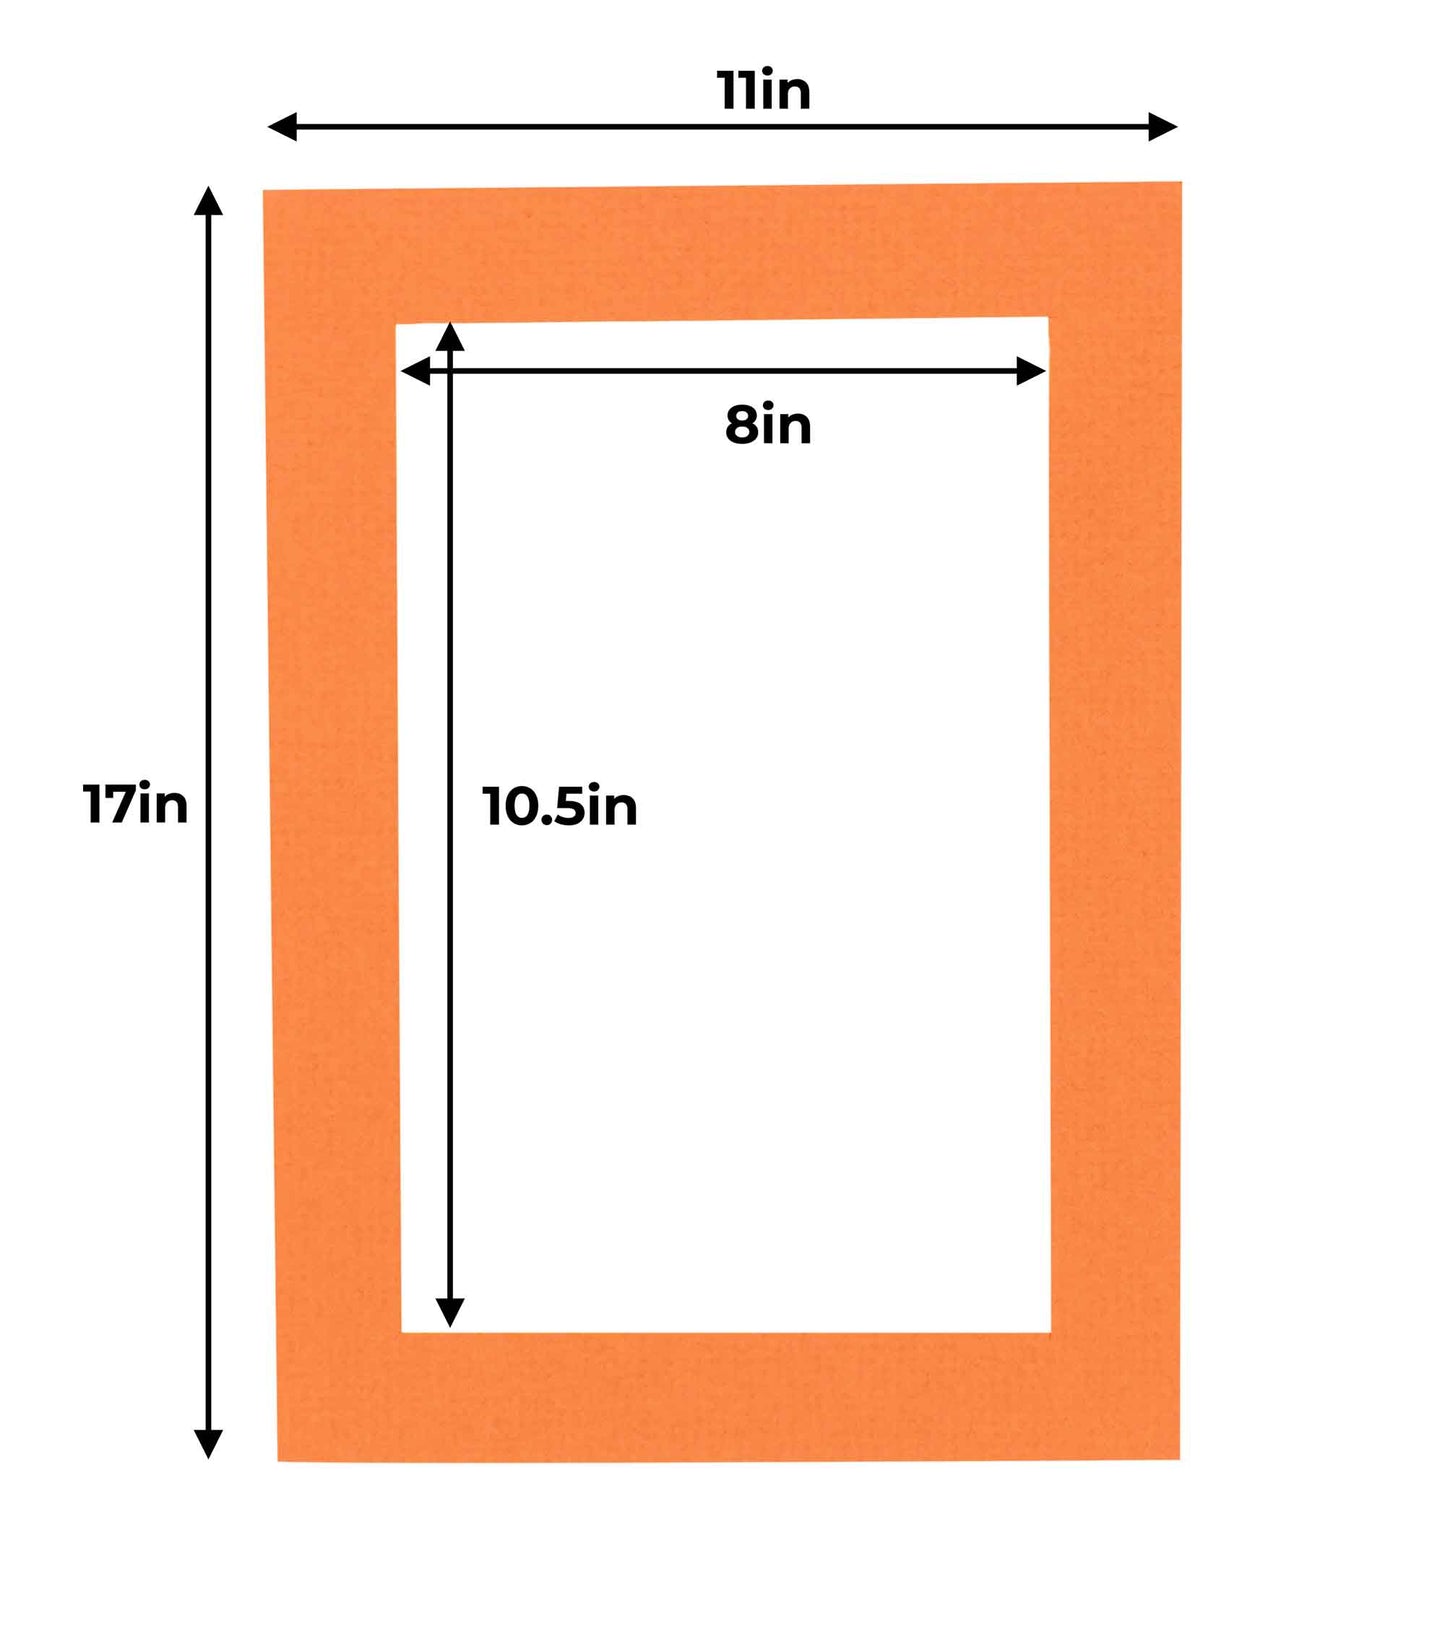 Pack of 10 Burnt Orange Precut Acid-Free Matboard Set with Clear Bags & Backings